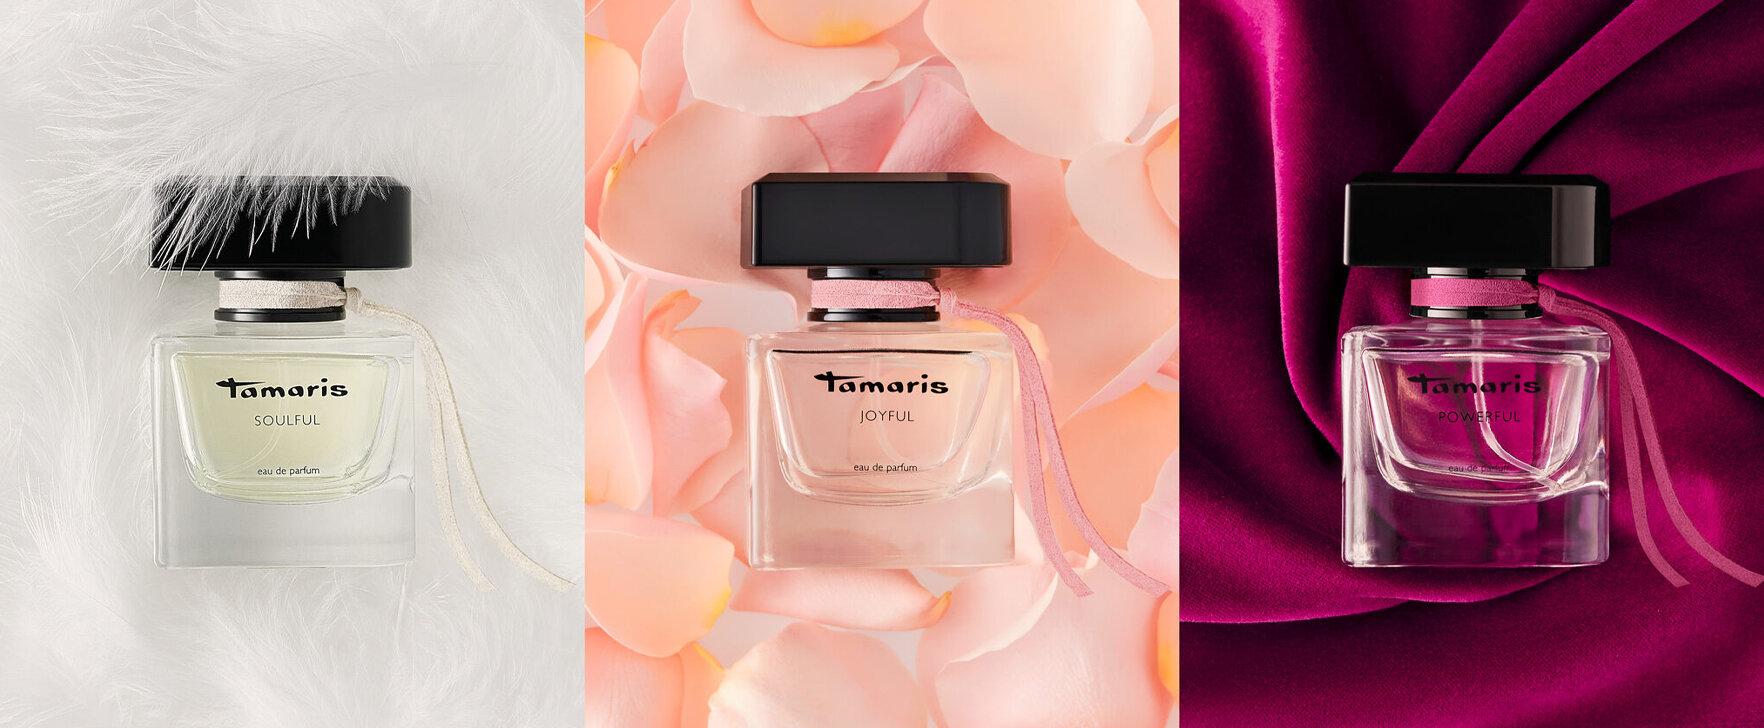 Tamaris' Perfume Debut: The New Women's Fragrances Powerful, Joyful,and Soulful.